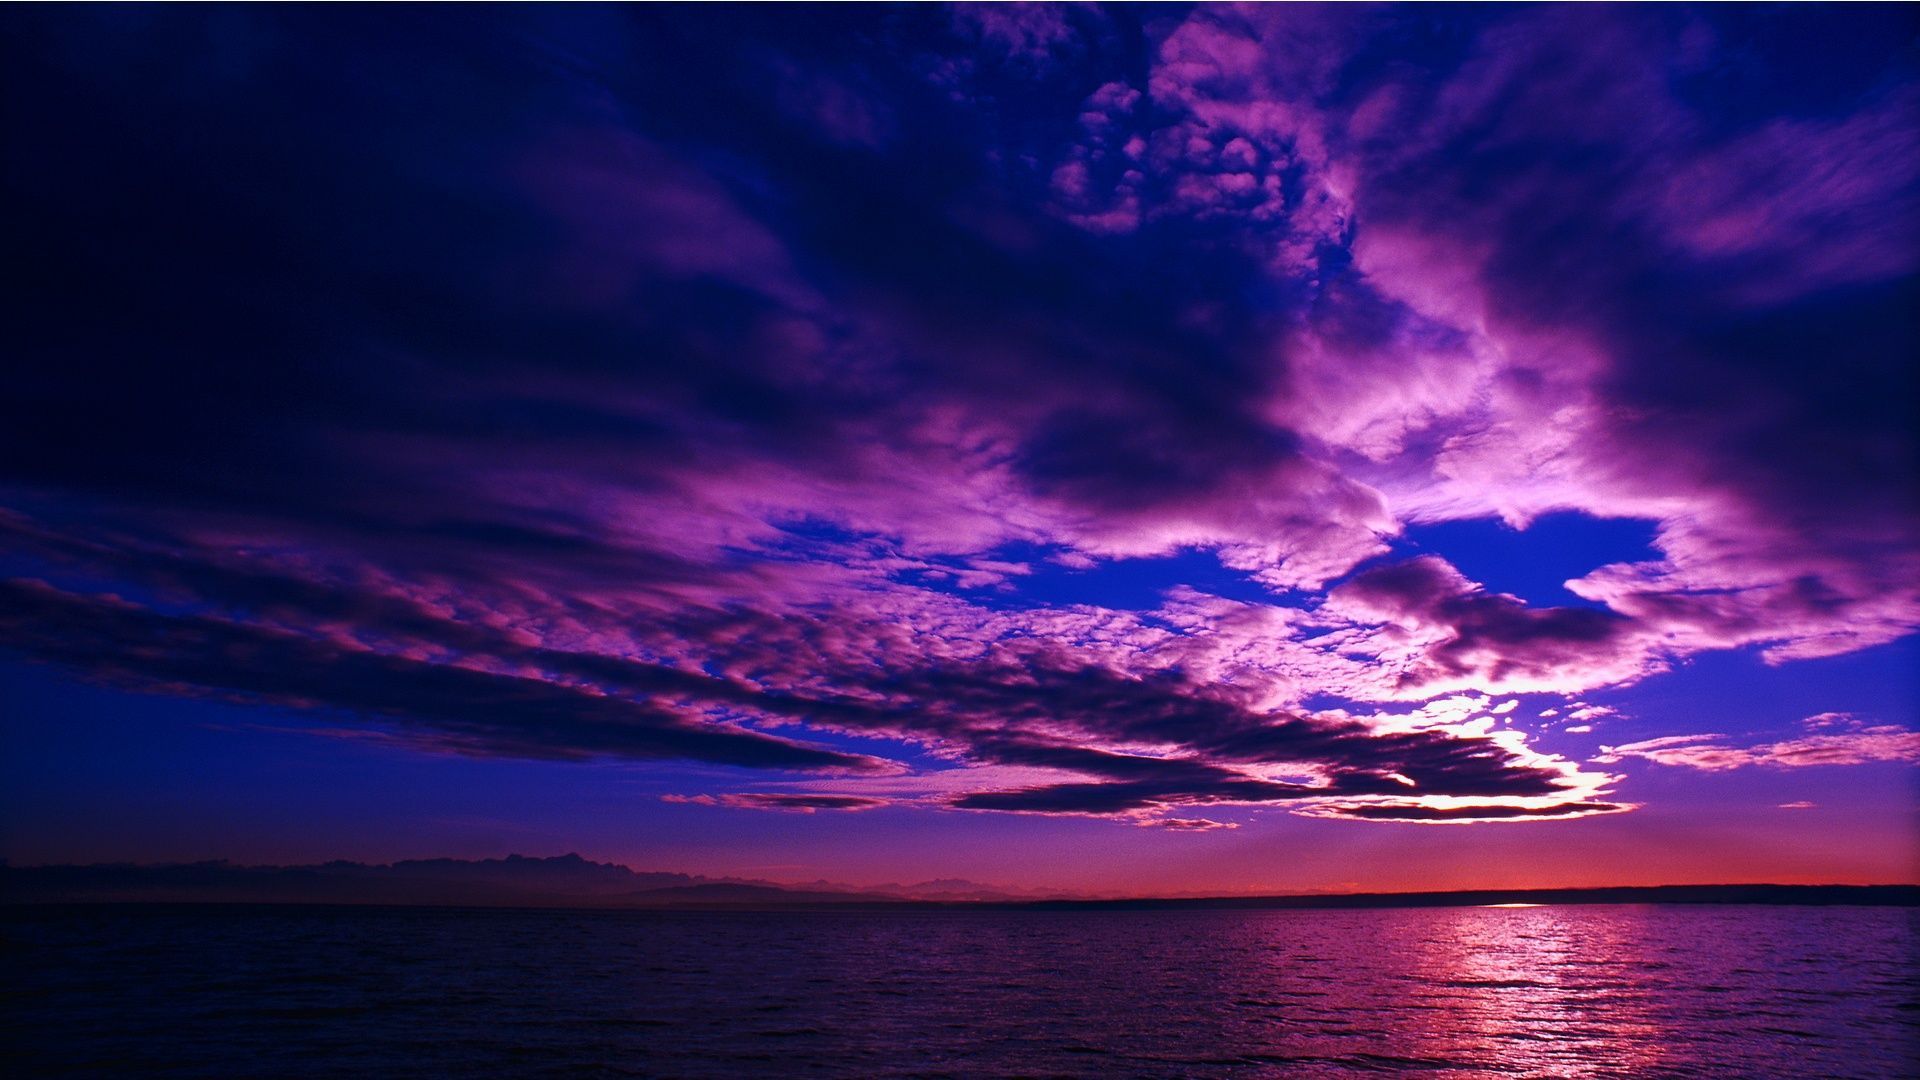 Beach Sunset Purple Wallpapers